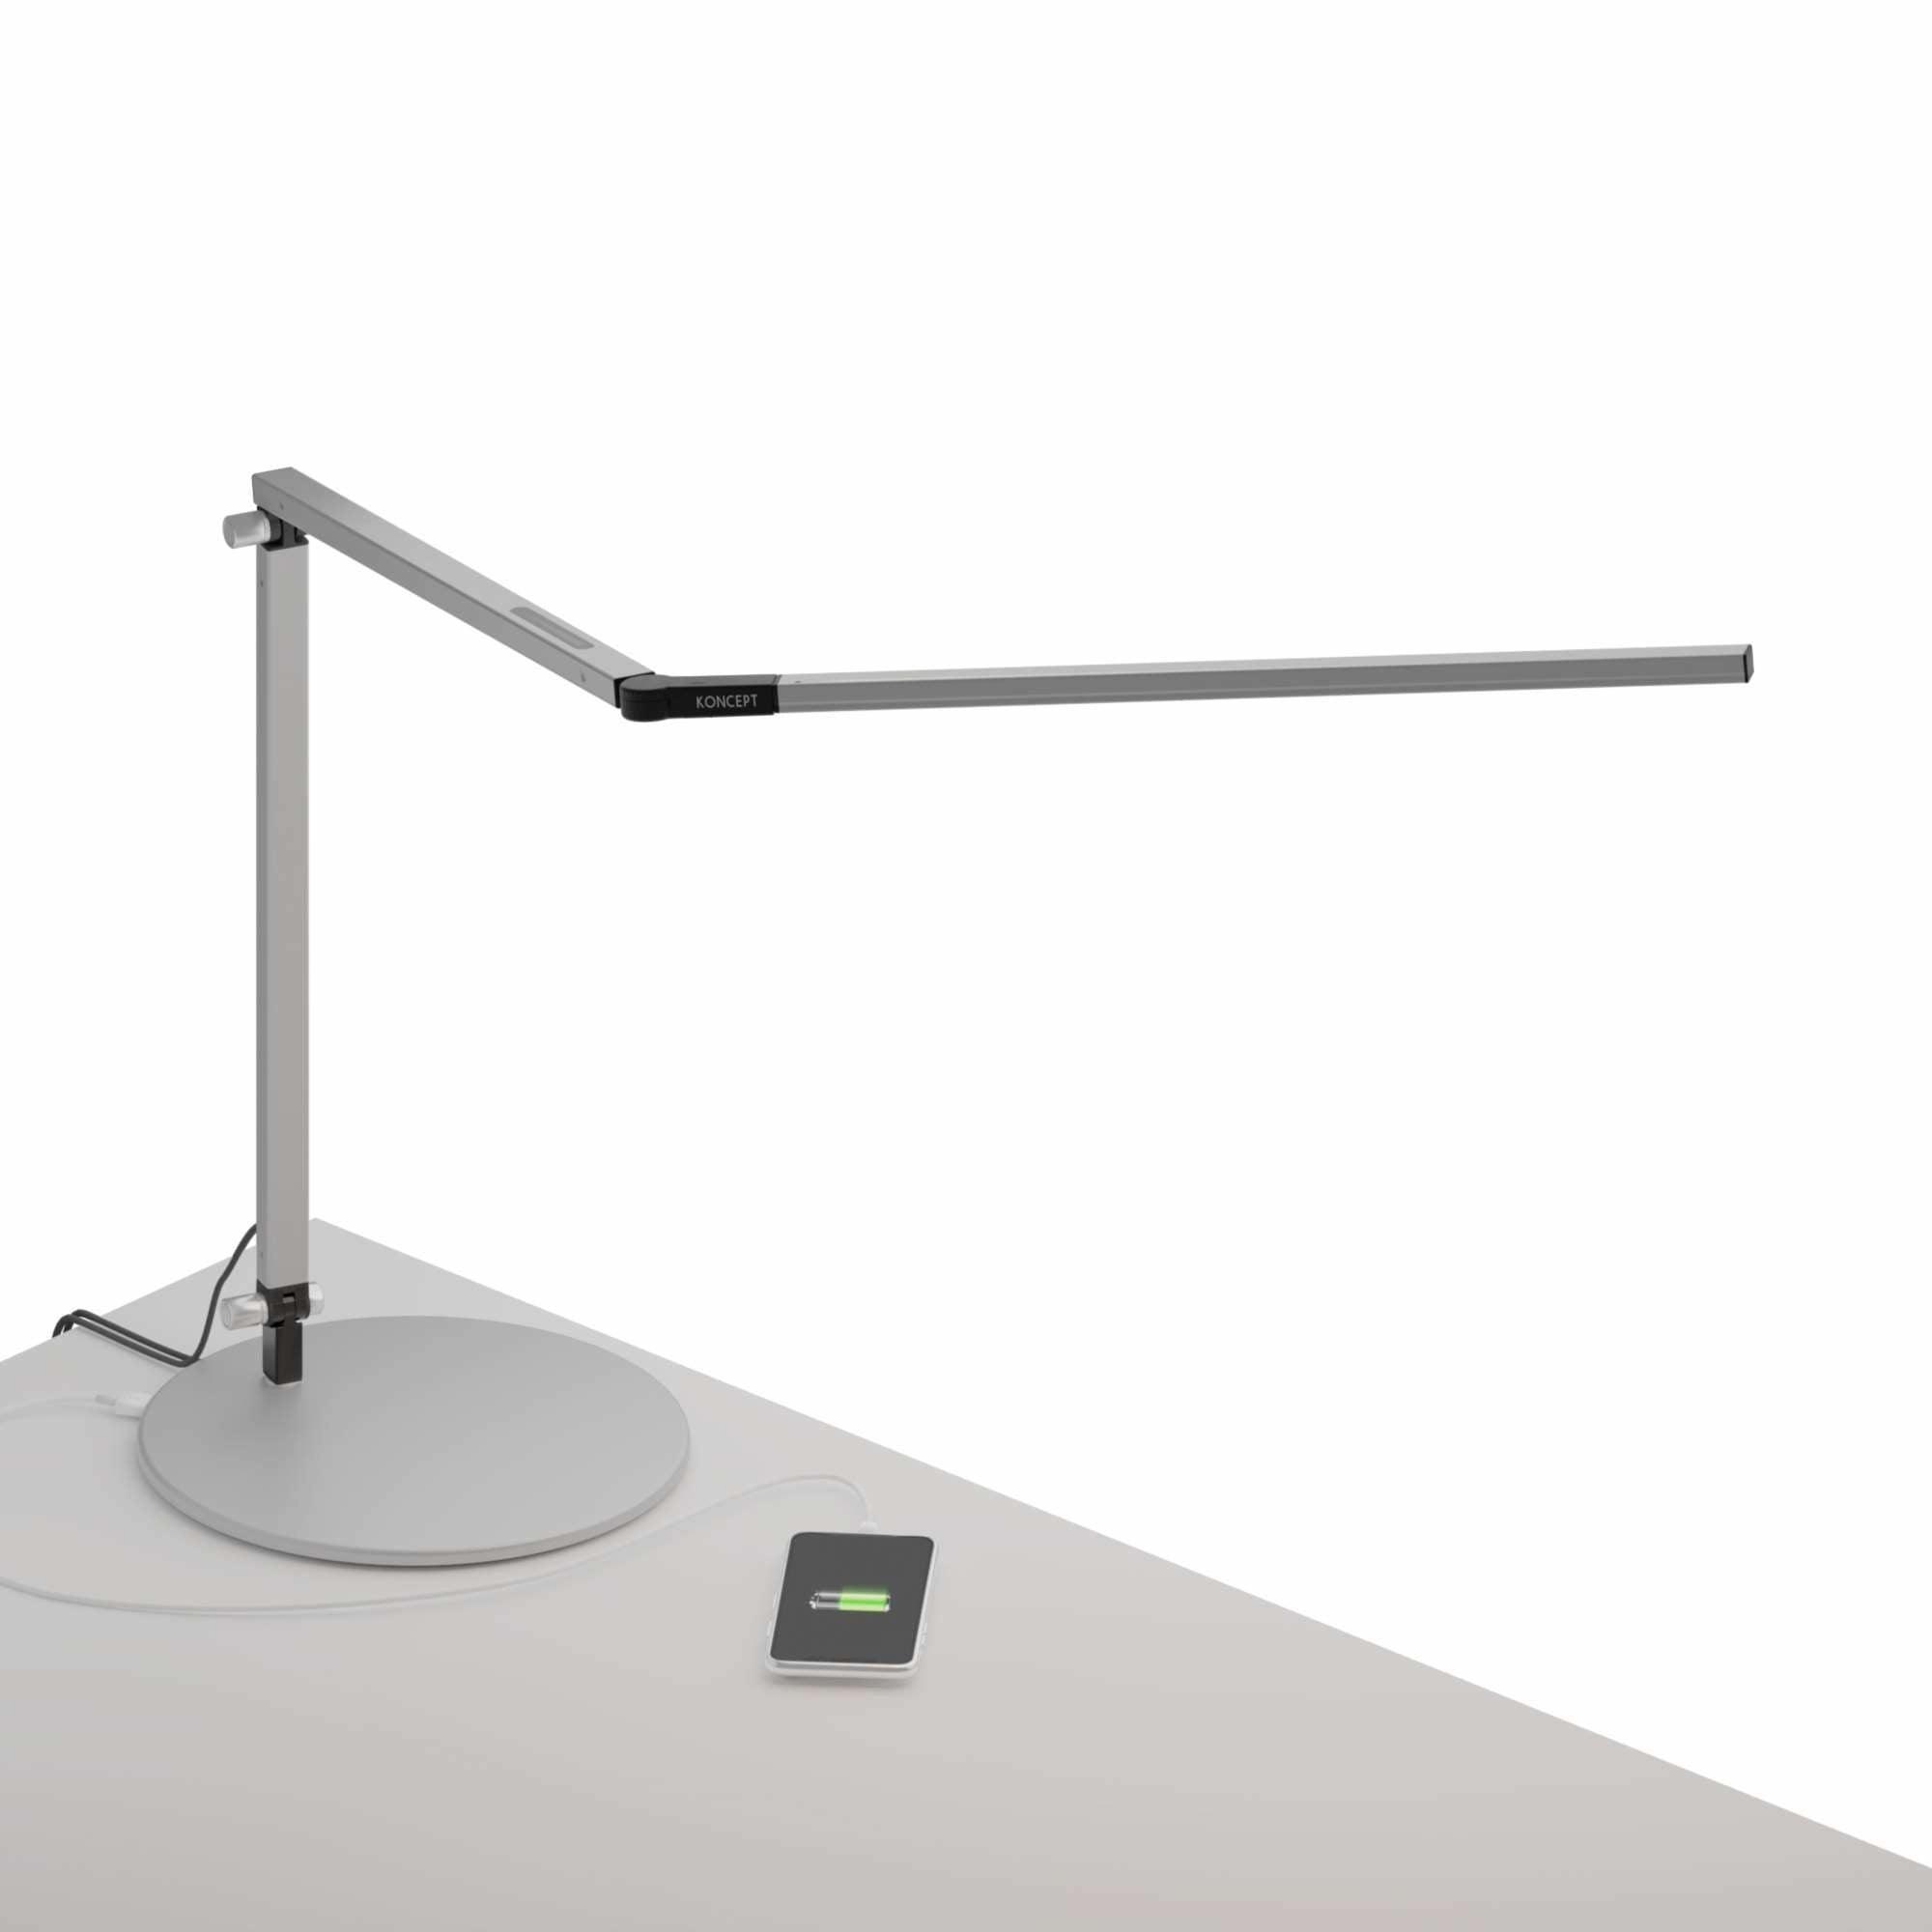 Koncept Lady Floor Lamp with USB Charging Port in Metallic Black, L7-MBK-FLR - 2